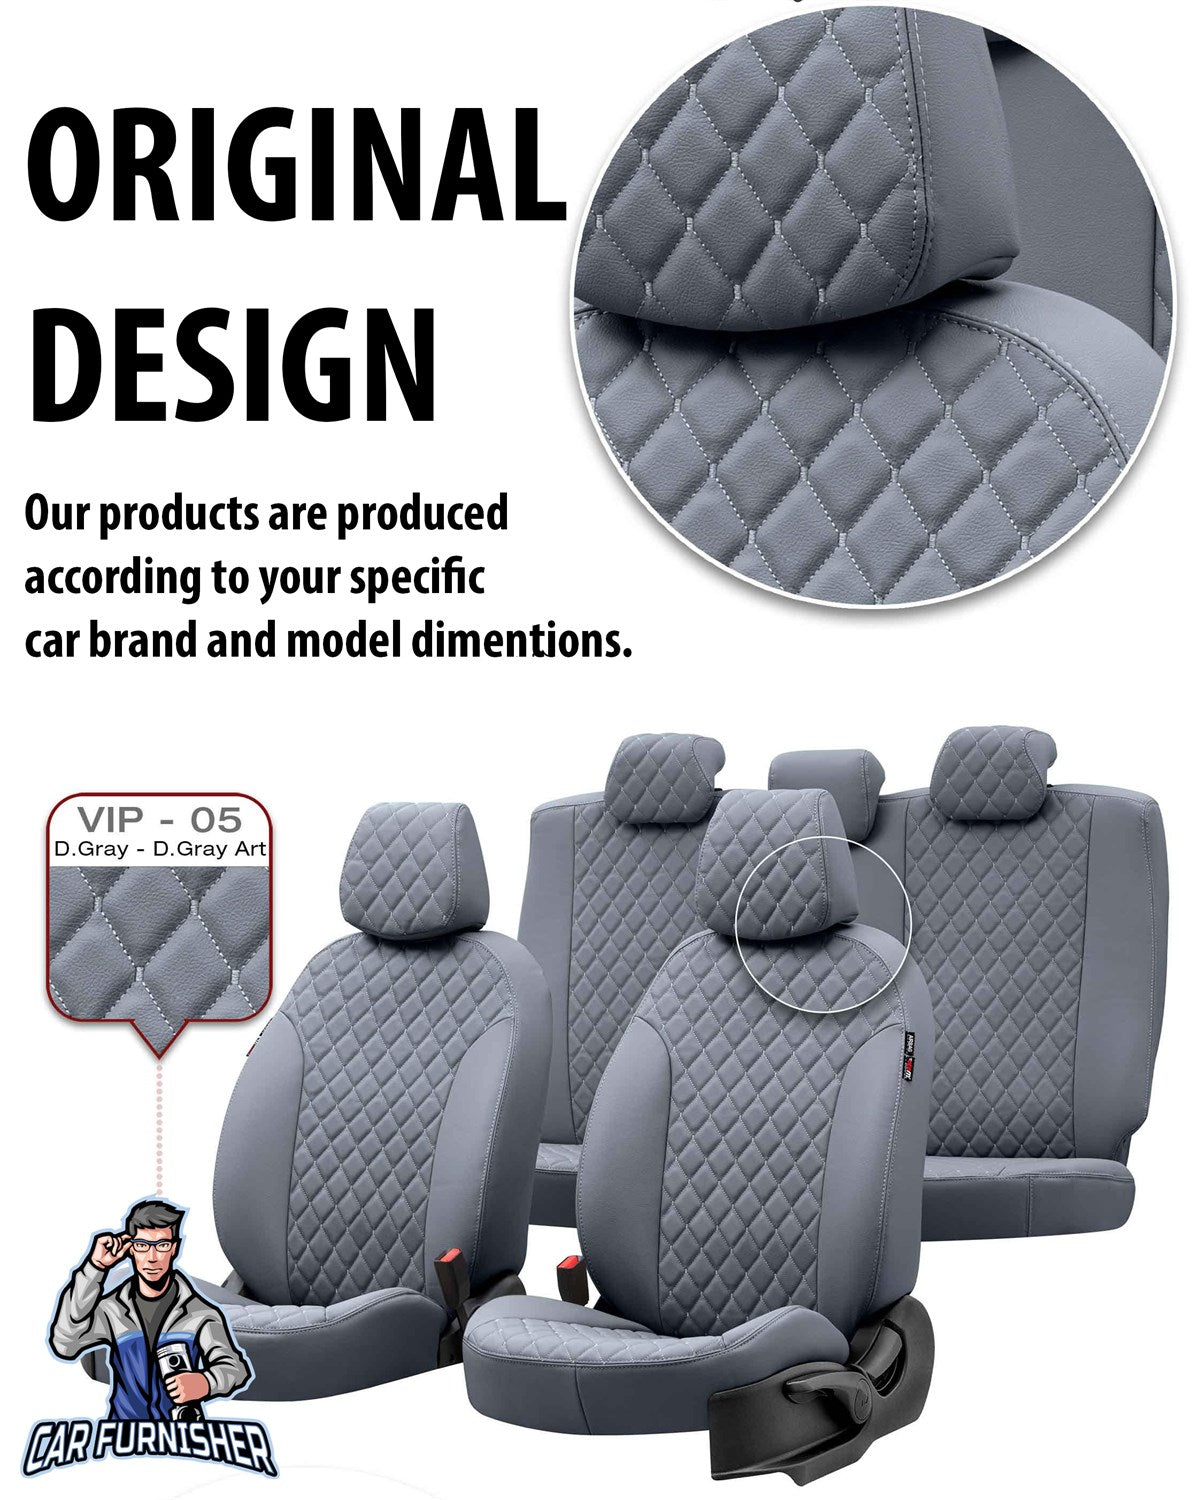 Suzuki Vitara Seat Covers Madrid Leather Design Beige Leather